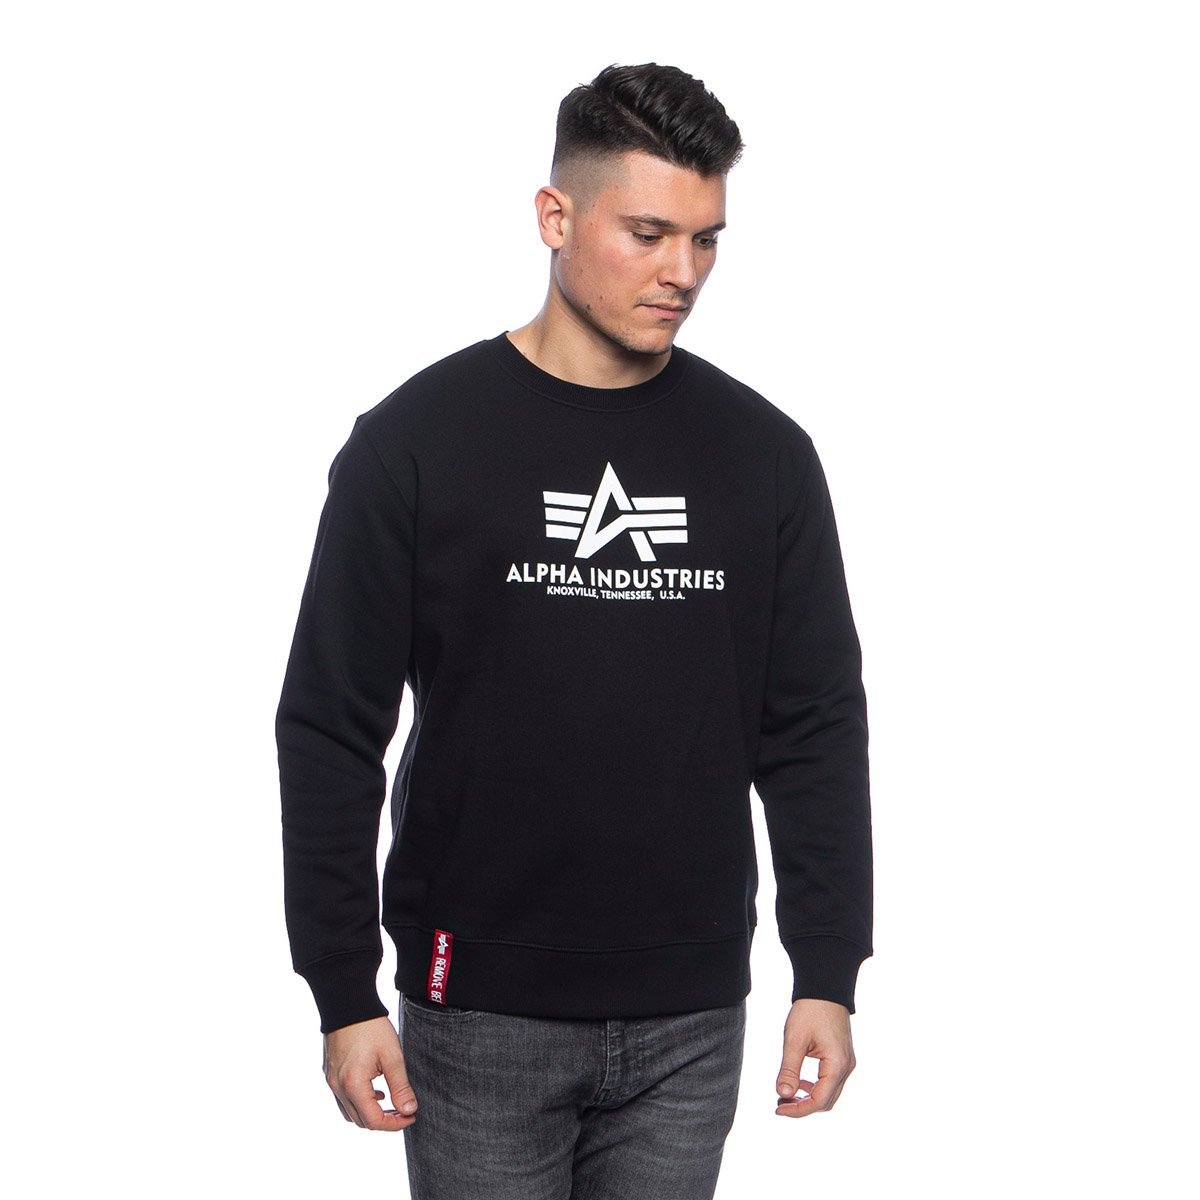 Alpha Sweater black Sweatshirt Industries Basic